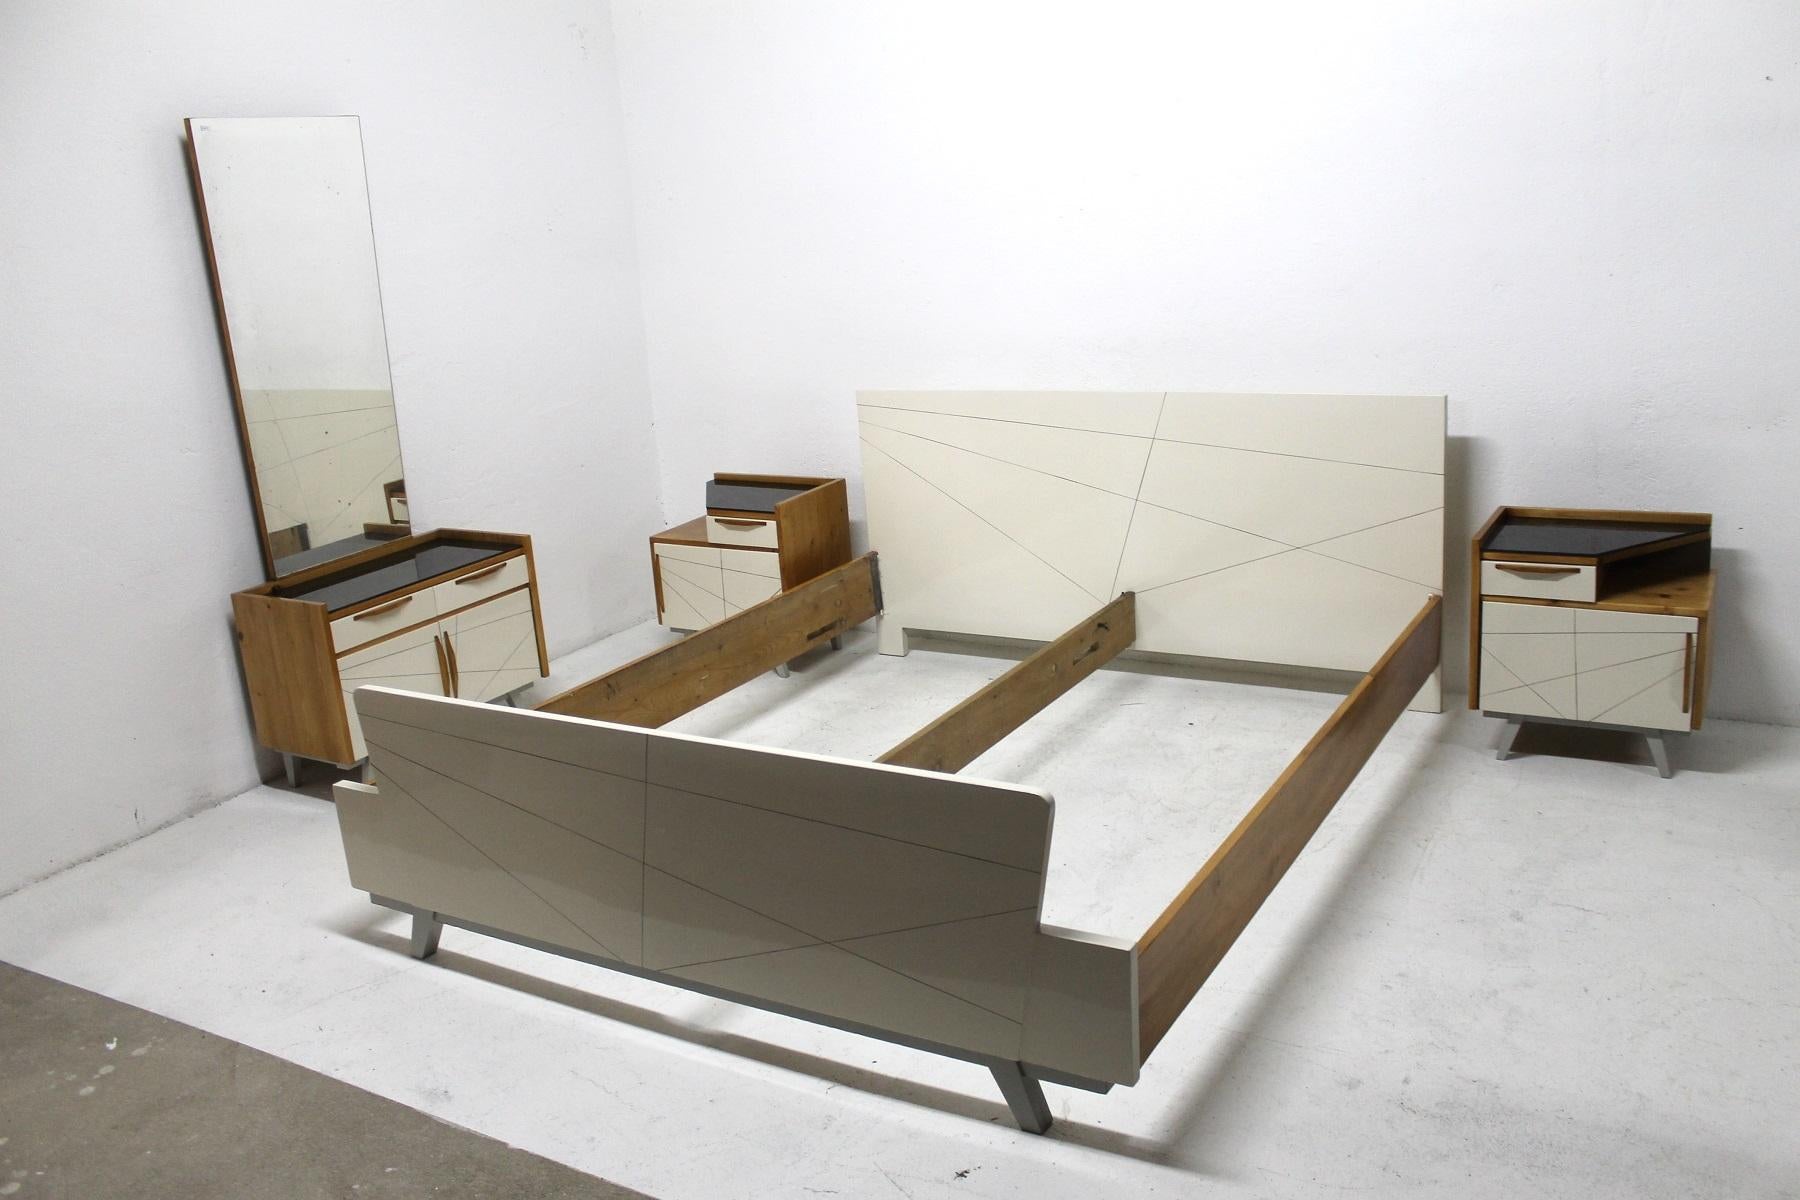 Midcentury Bedroom Set, Expo 58, Czechoslovakia (Moderne der Mitte des Jahrhunderts)